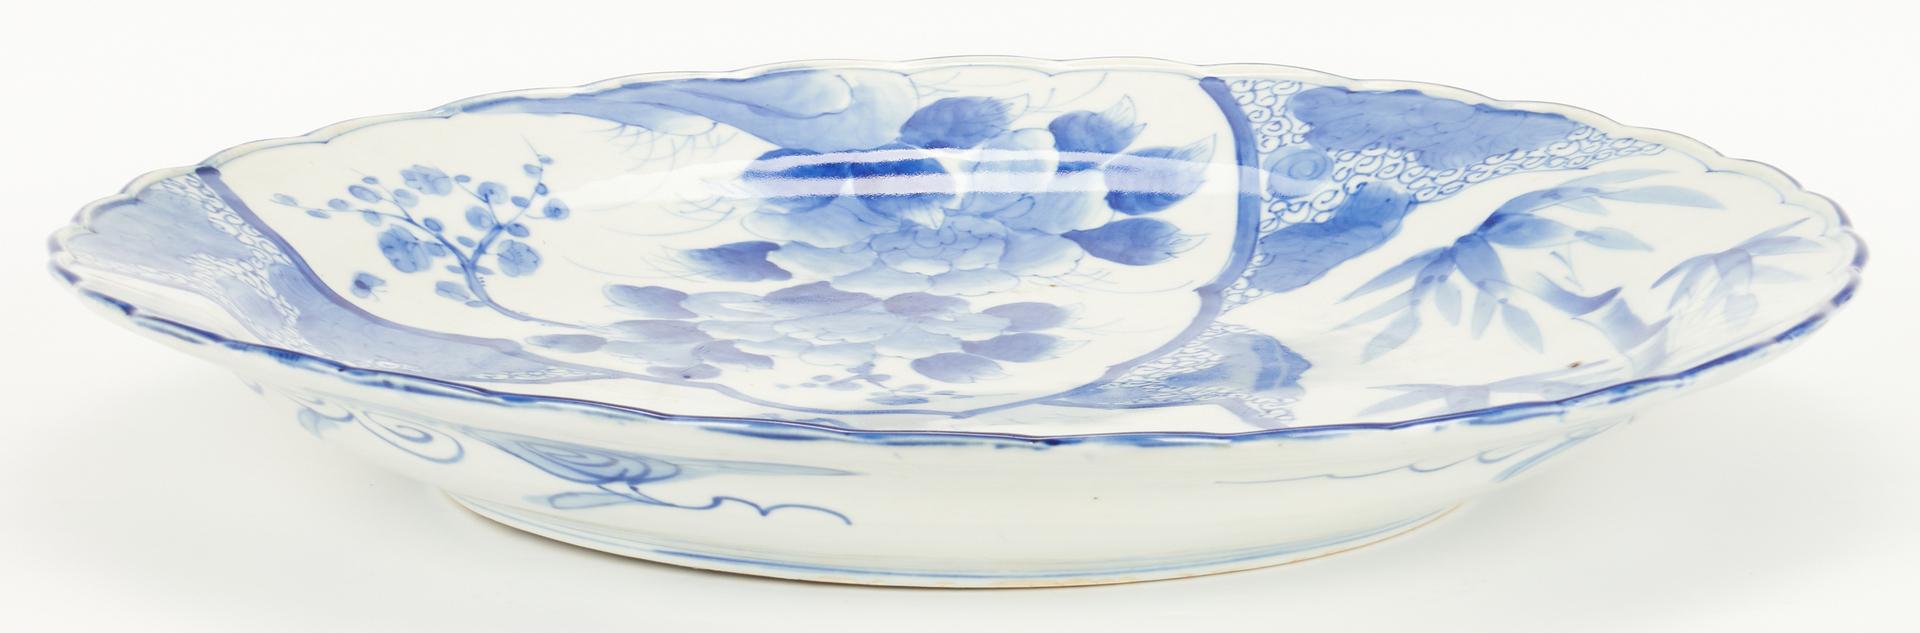 Meiji Hardwood Tray and Large Porcelain Charger - Image 9 of 17